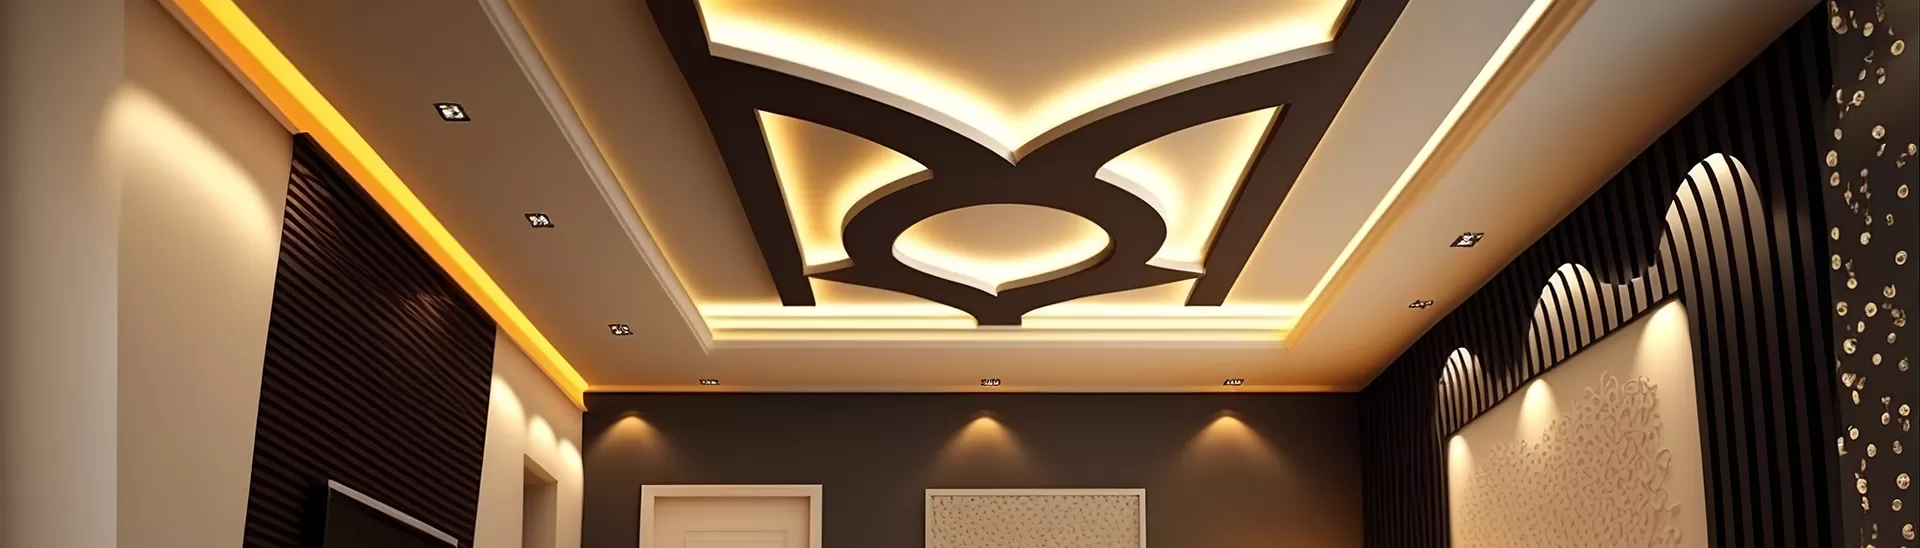 10 Fabulous False Ceiling Room Designs For Modern Homes .webp?itok= 4lv0xh2